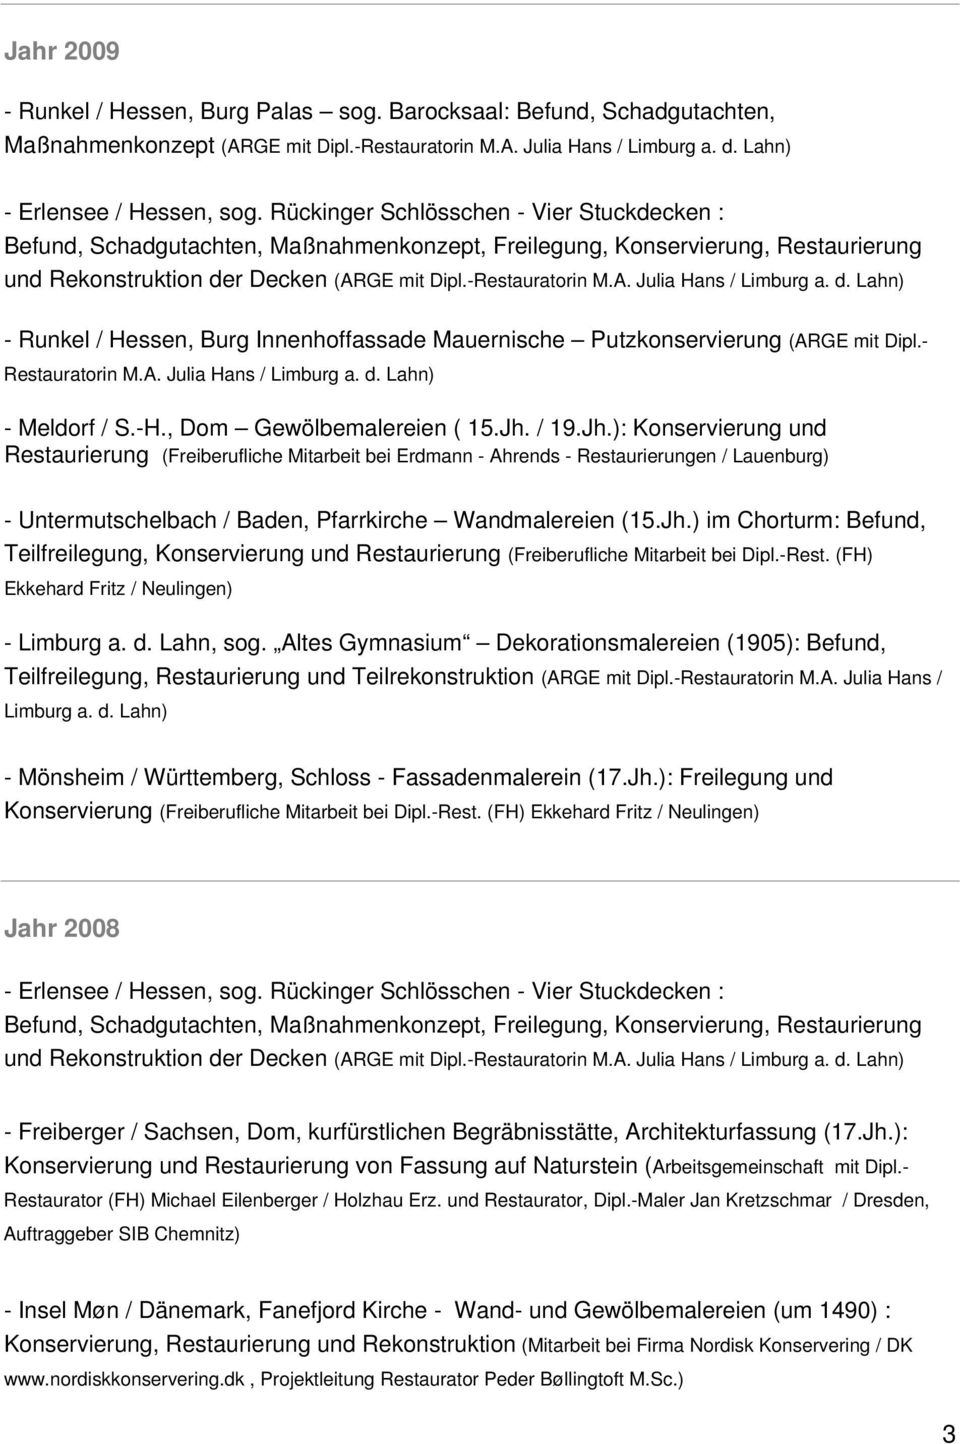 d. Lahn) - Runkel / Hessen, Burg Innenhoffassade Mauernische Putzkonservierung (ARGE mit Dipl.- Restauratorin M.A. Julia Hans / Limburg a. d. Lahn) - Meldorf / S.-H., Dom Gewölbemalereien ( 15.Jh.